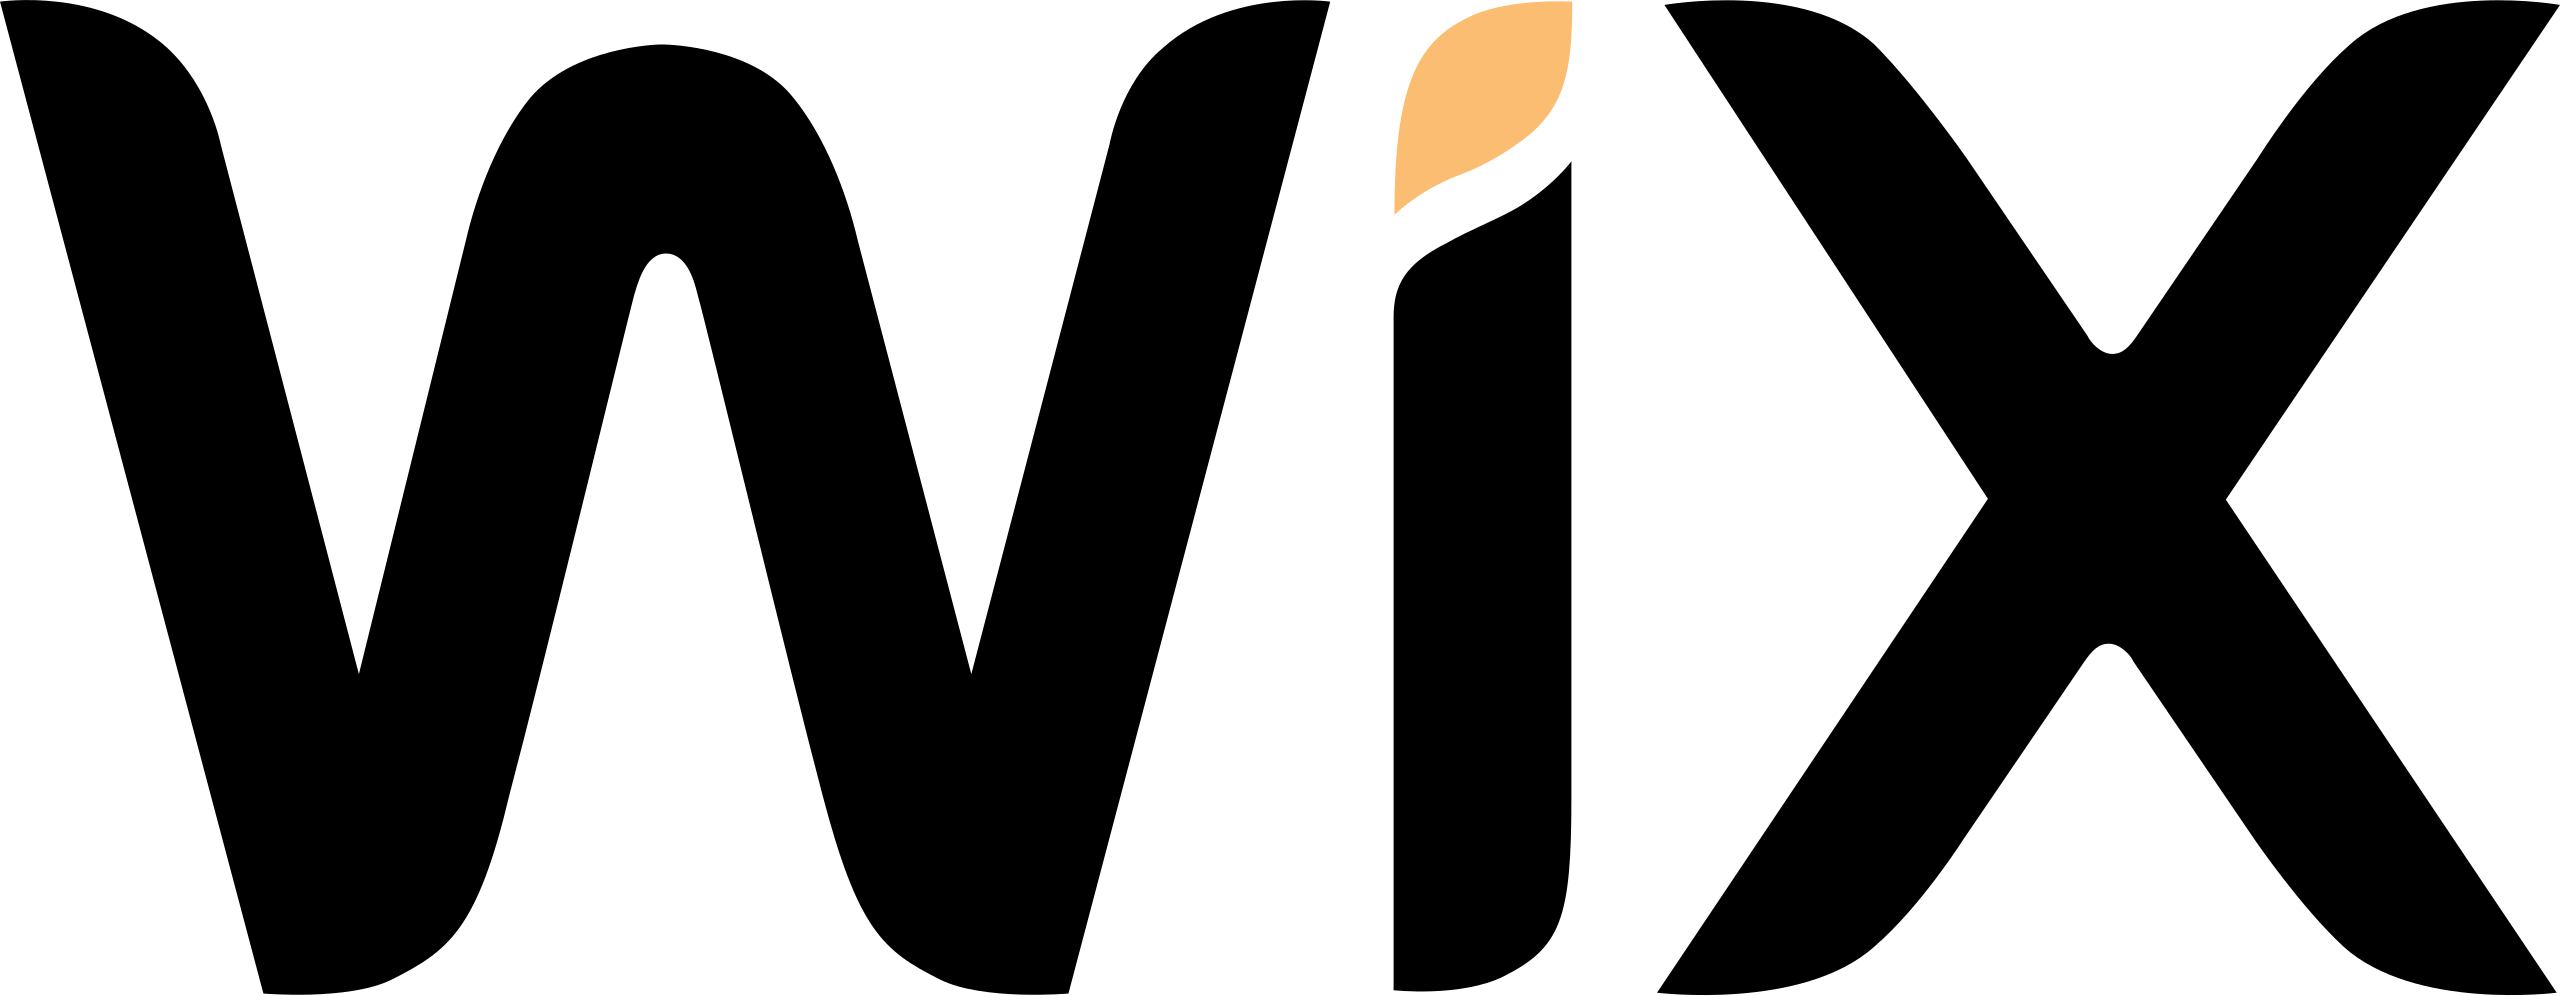 Wix Logo, E-Commerce and Website Builder